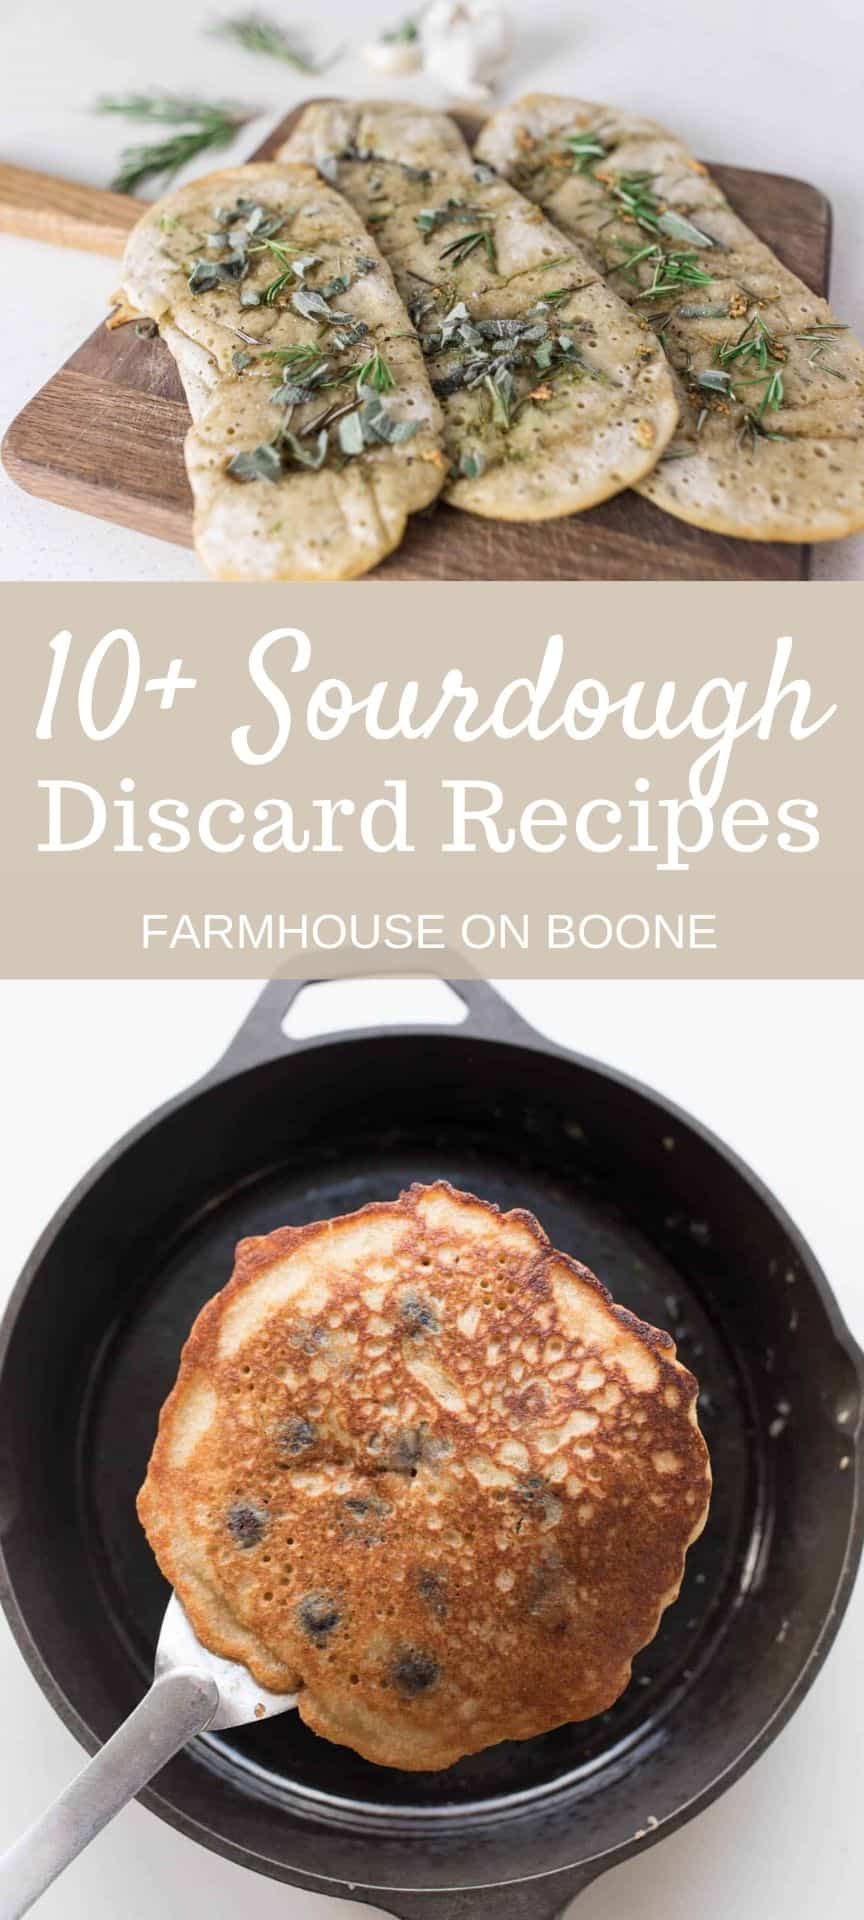 10+ Sourdough Discard Recipes - Farmhouse on Boone